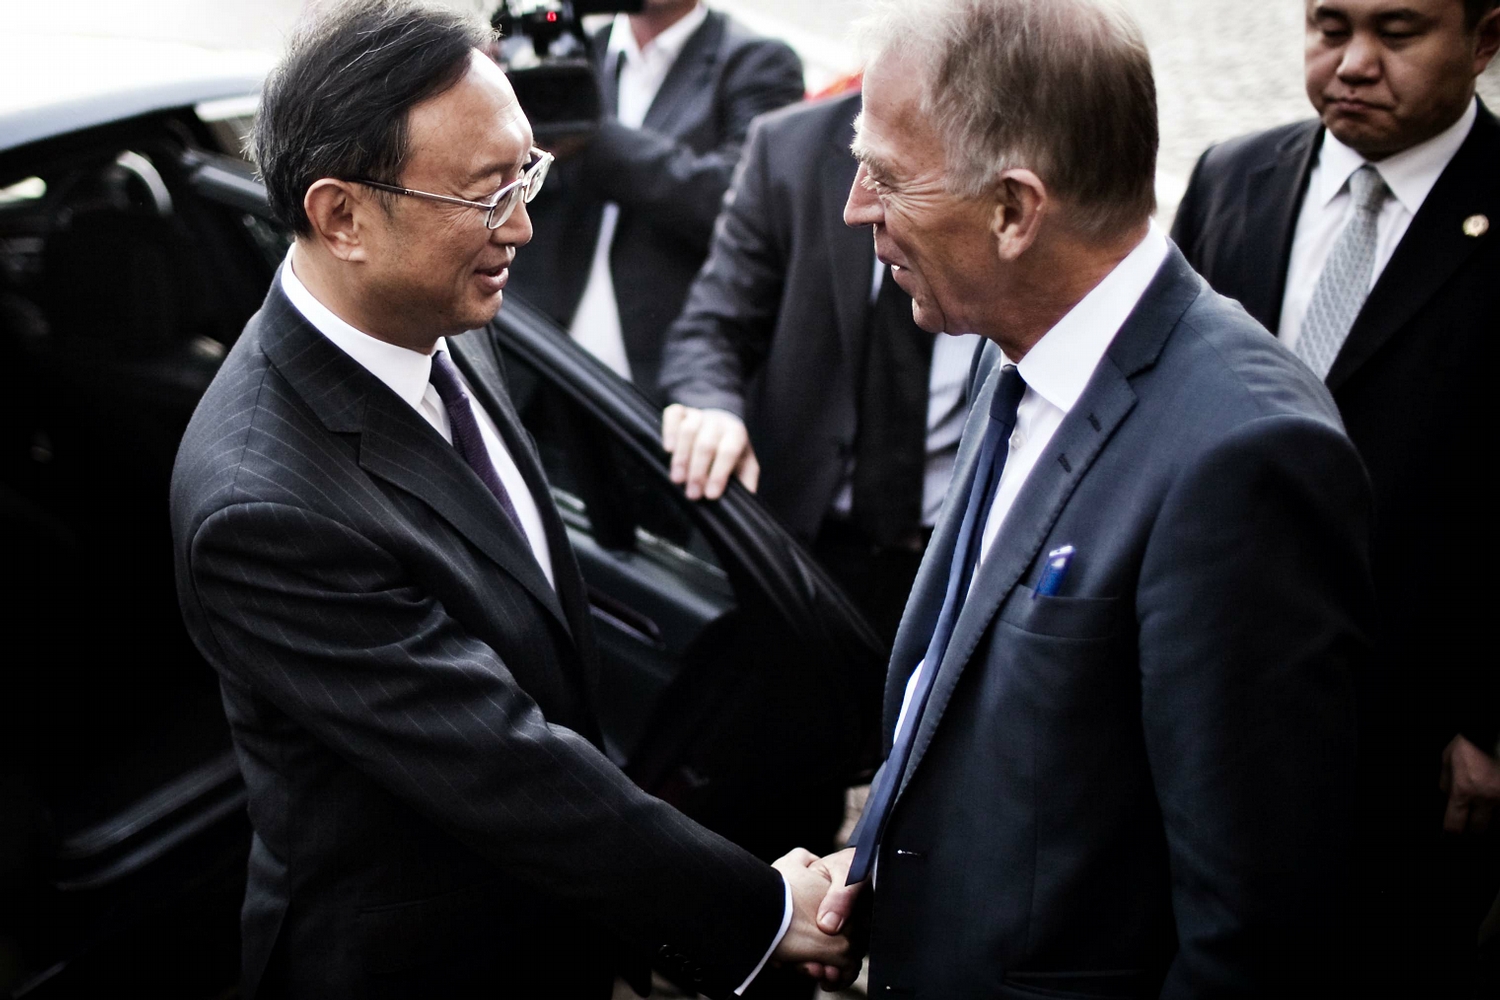 Foreign Minister Yang Jiechi amd Villy Søvndal